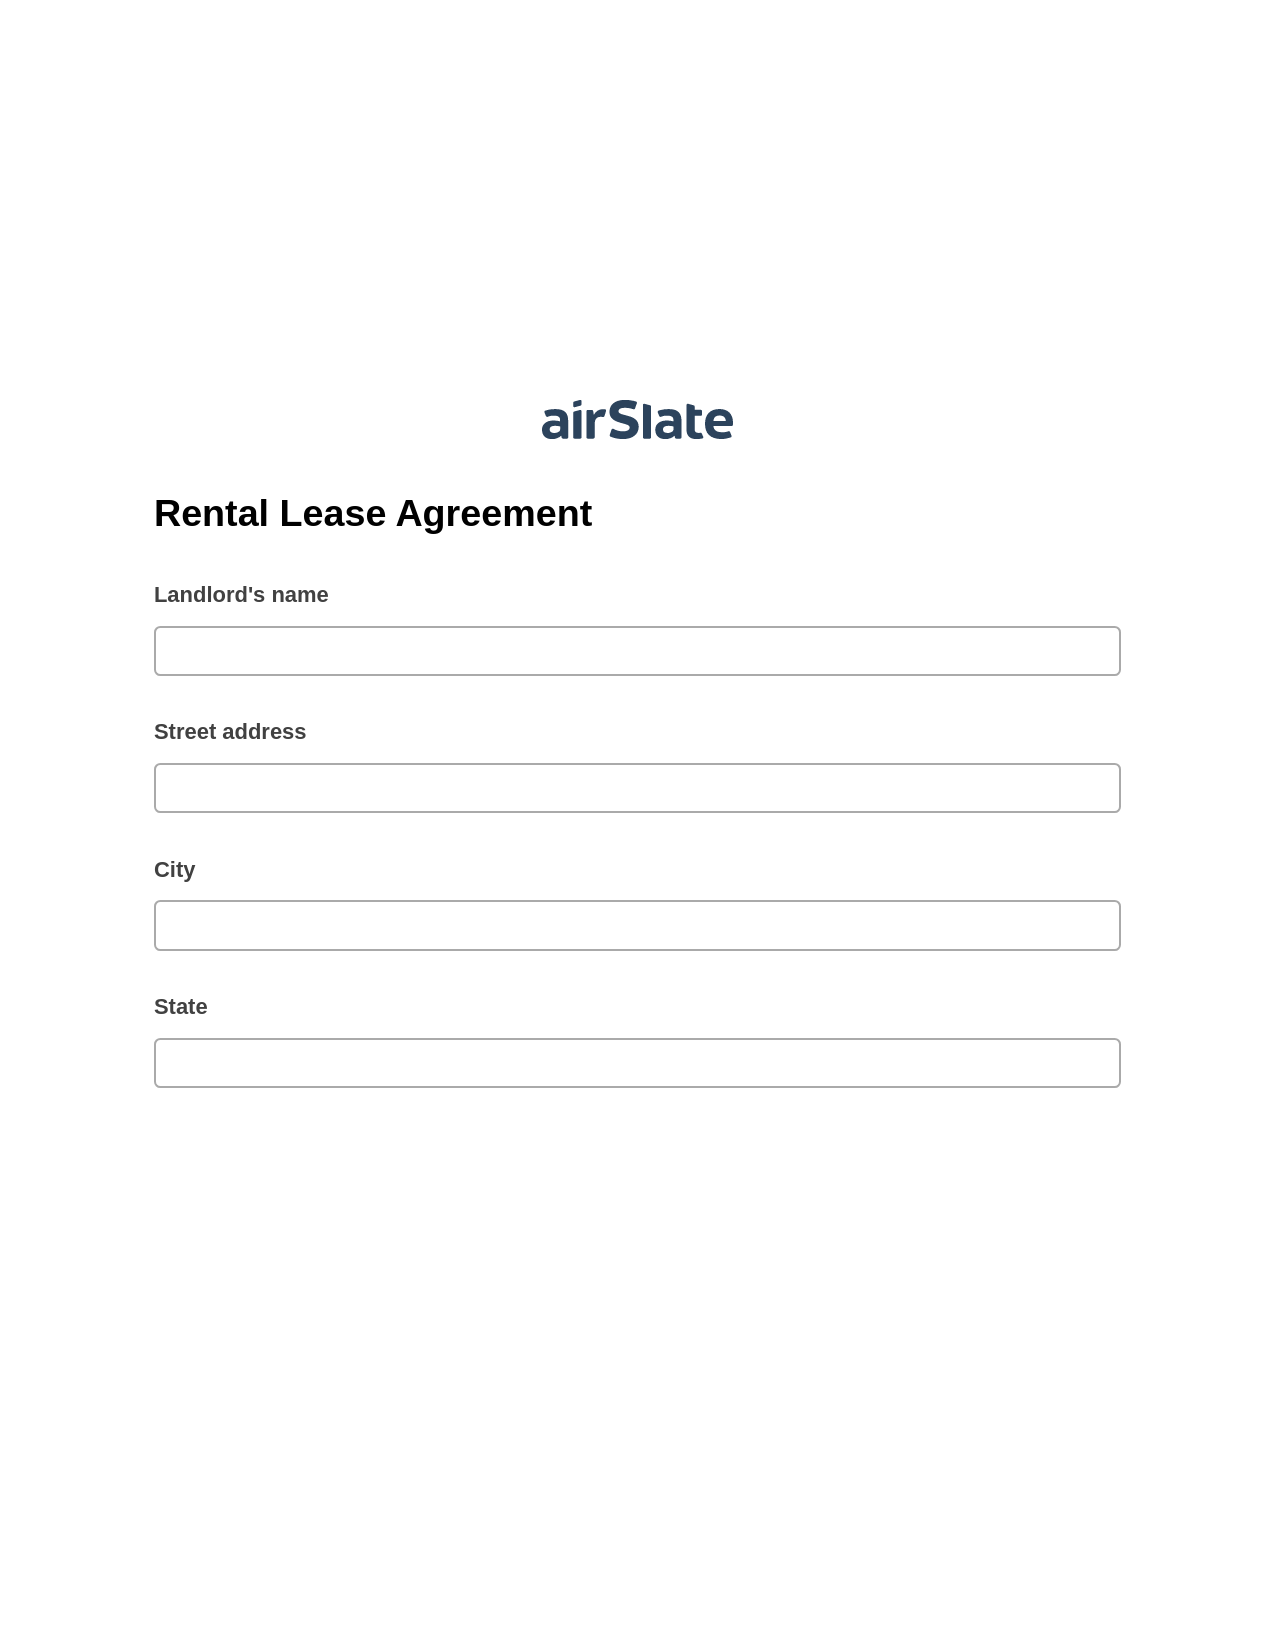 Rental Lease Agreement Pre-fill from CSV File Dropdown Options Bot, Slack Notification Bot, Dropbox Bot